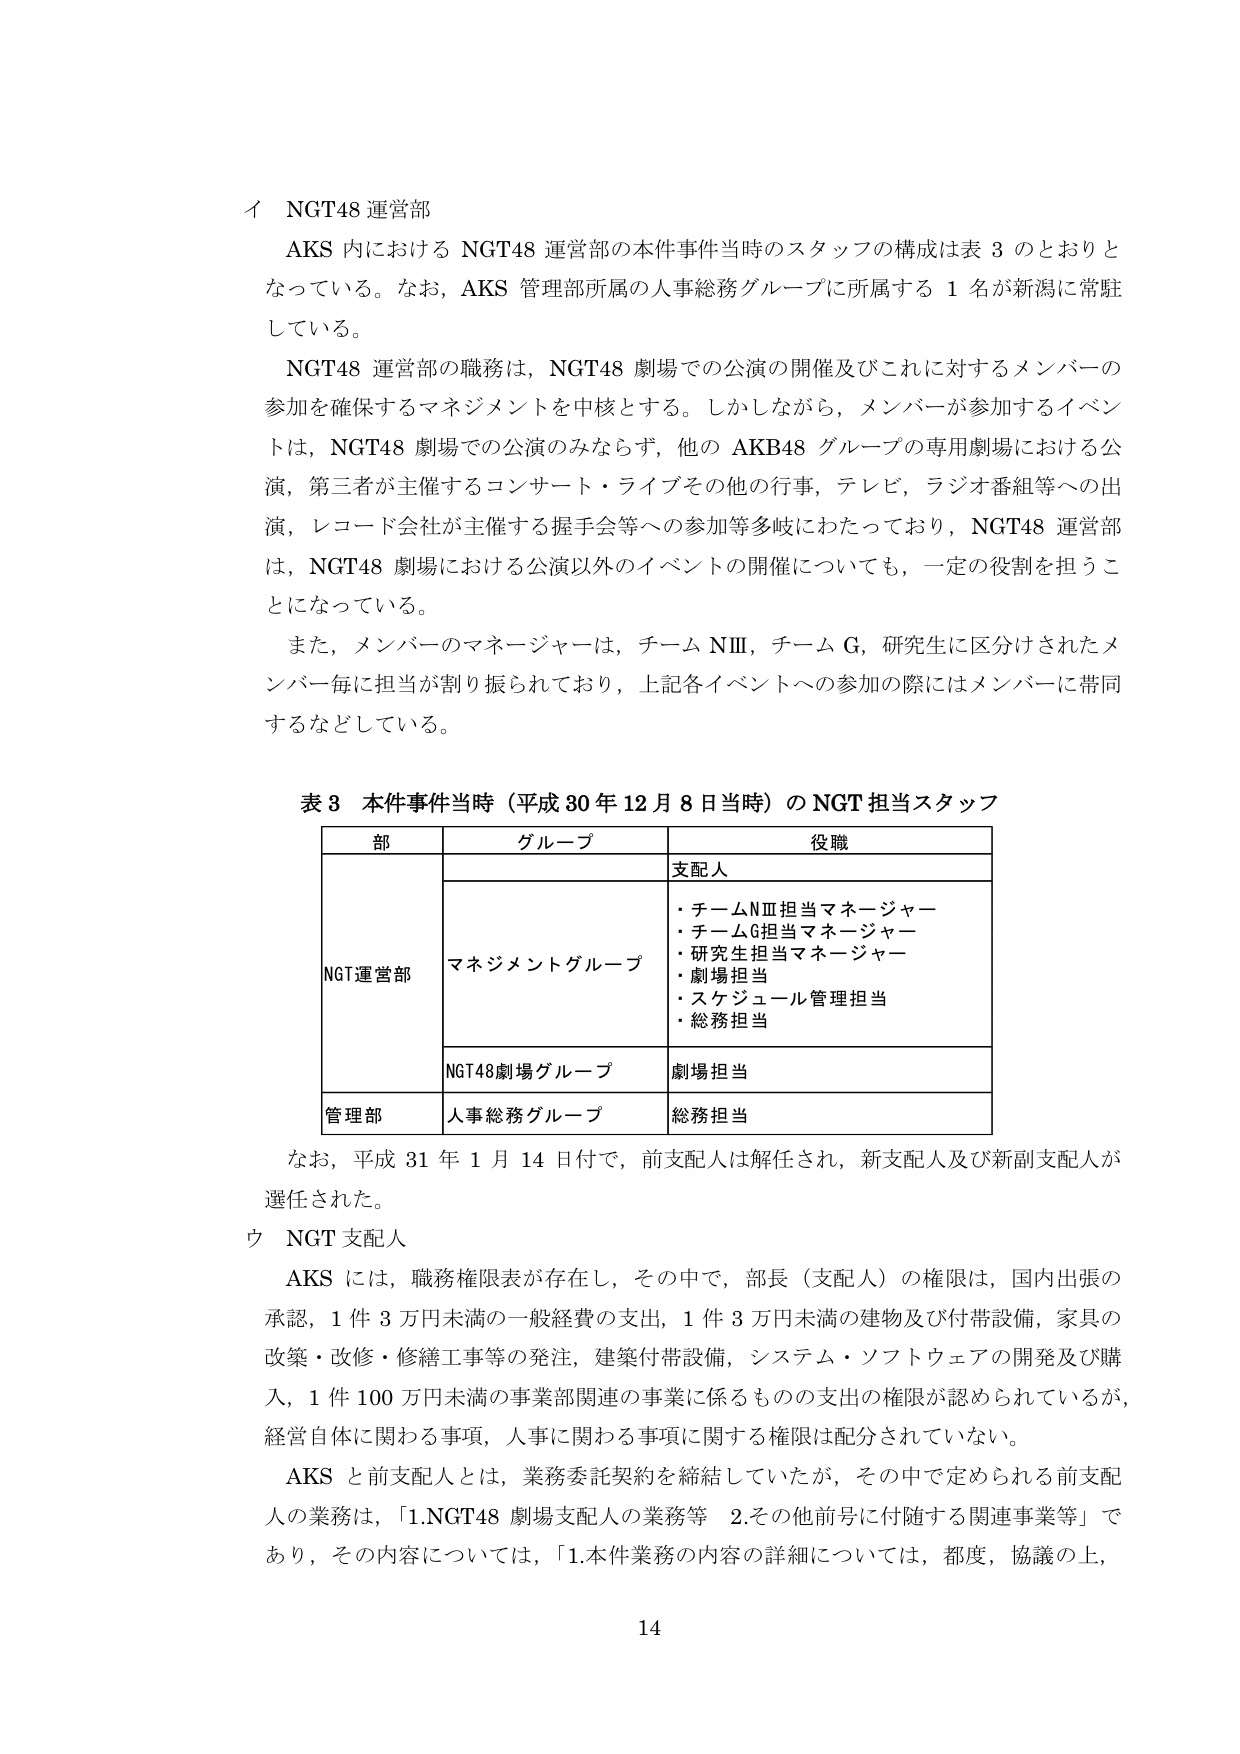 NGT48第三者委員会調査報告書16